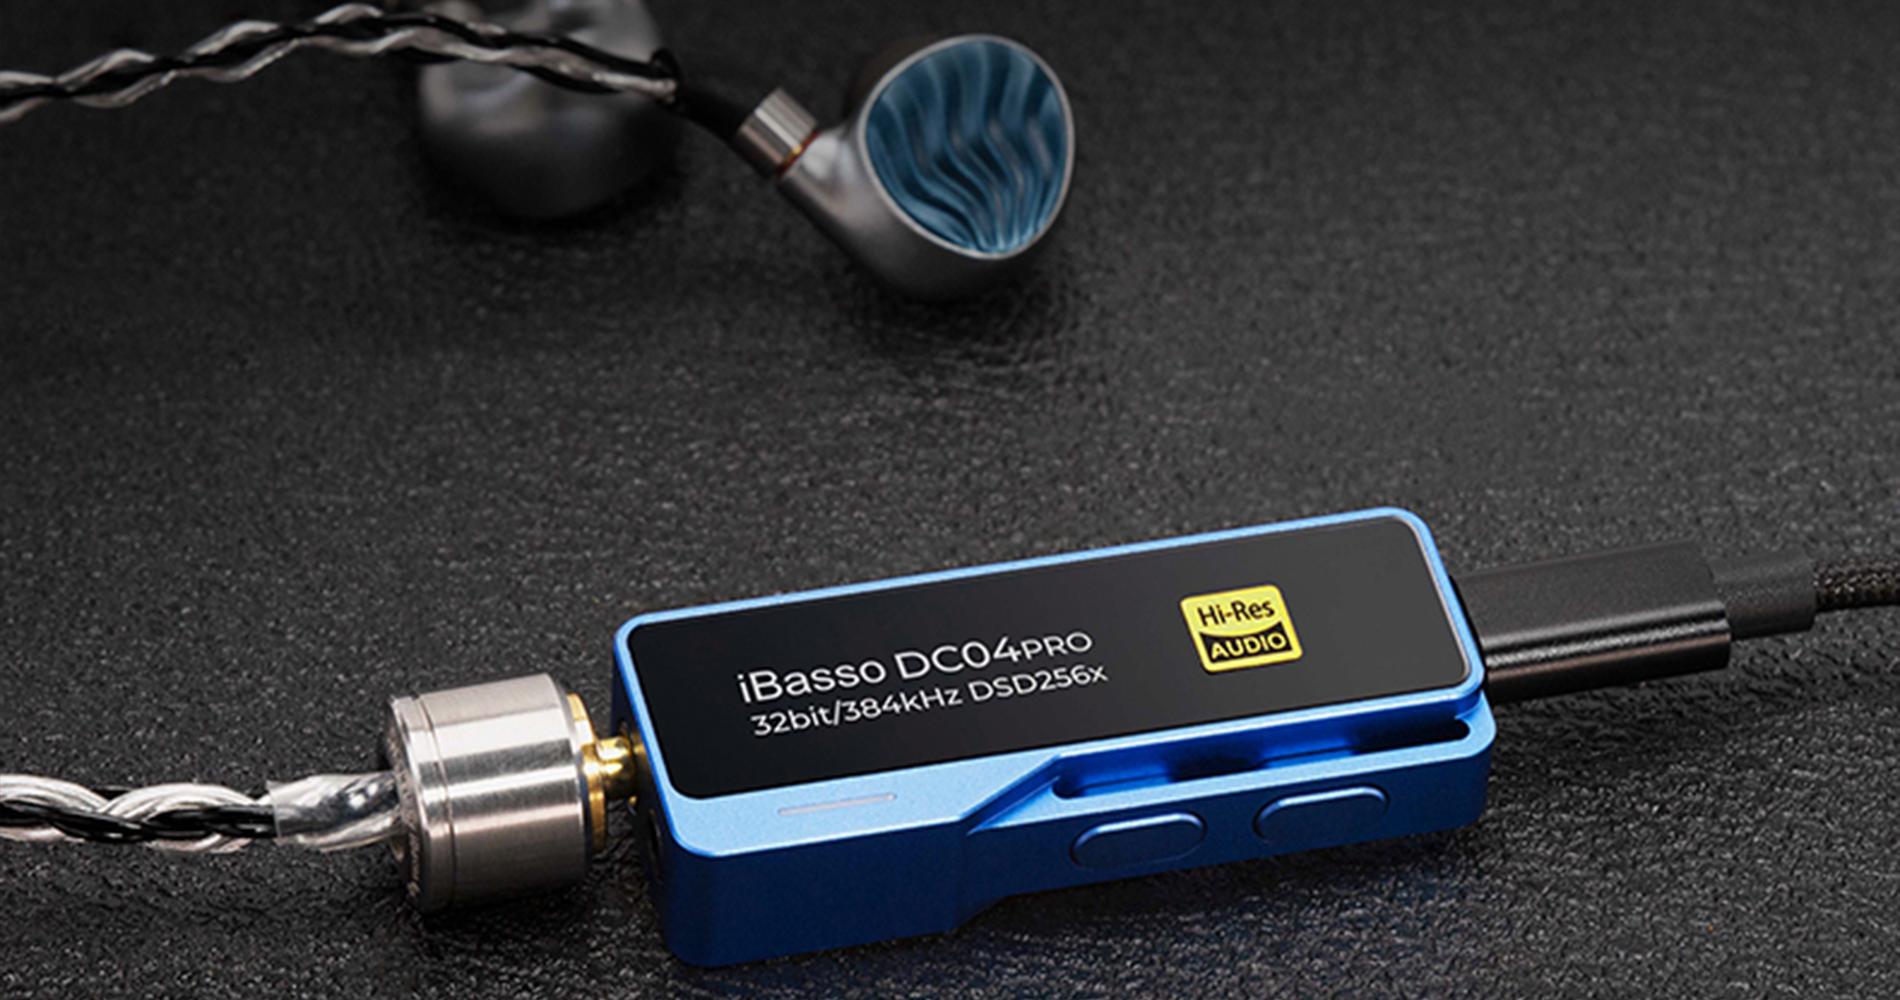 iBasso DC04PRO Portable USB DAC/Amp AP Measurements